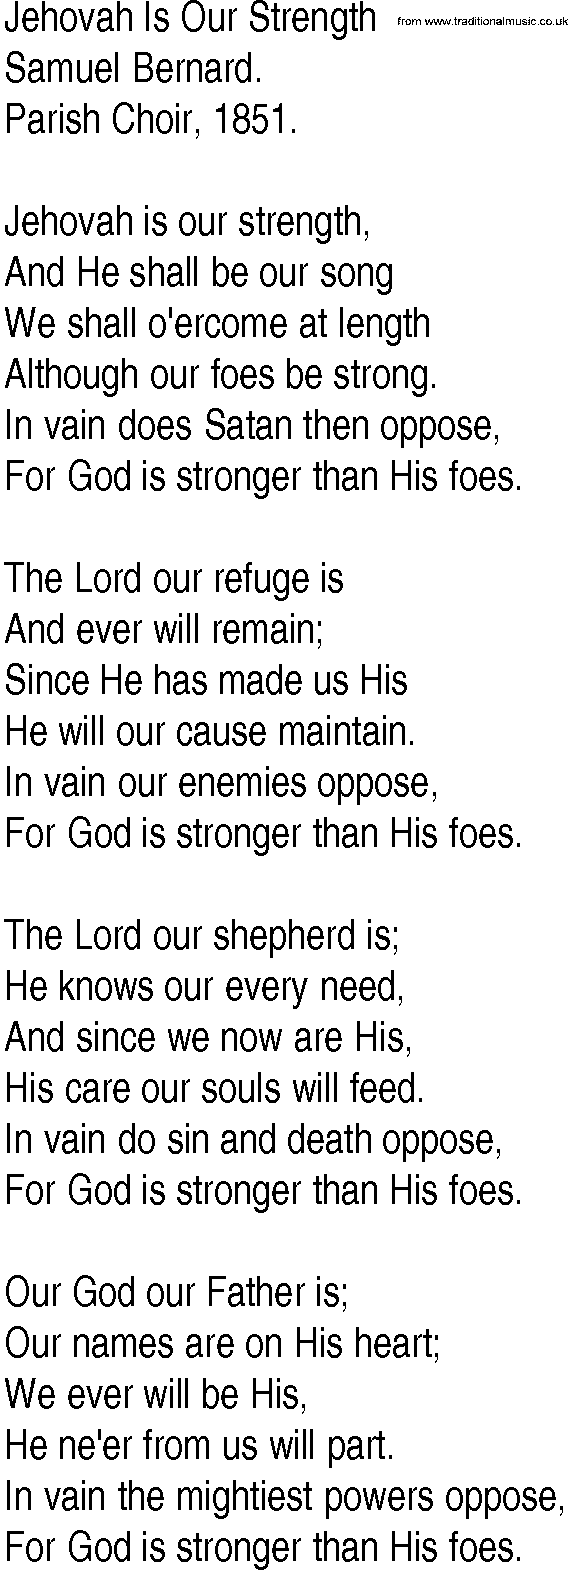 Hymn and Gospel Song: Jehovah Is Our Strength by Samuel Bernard lyrics